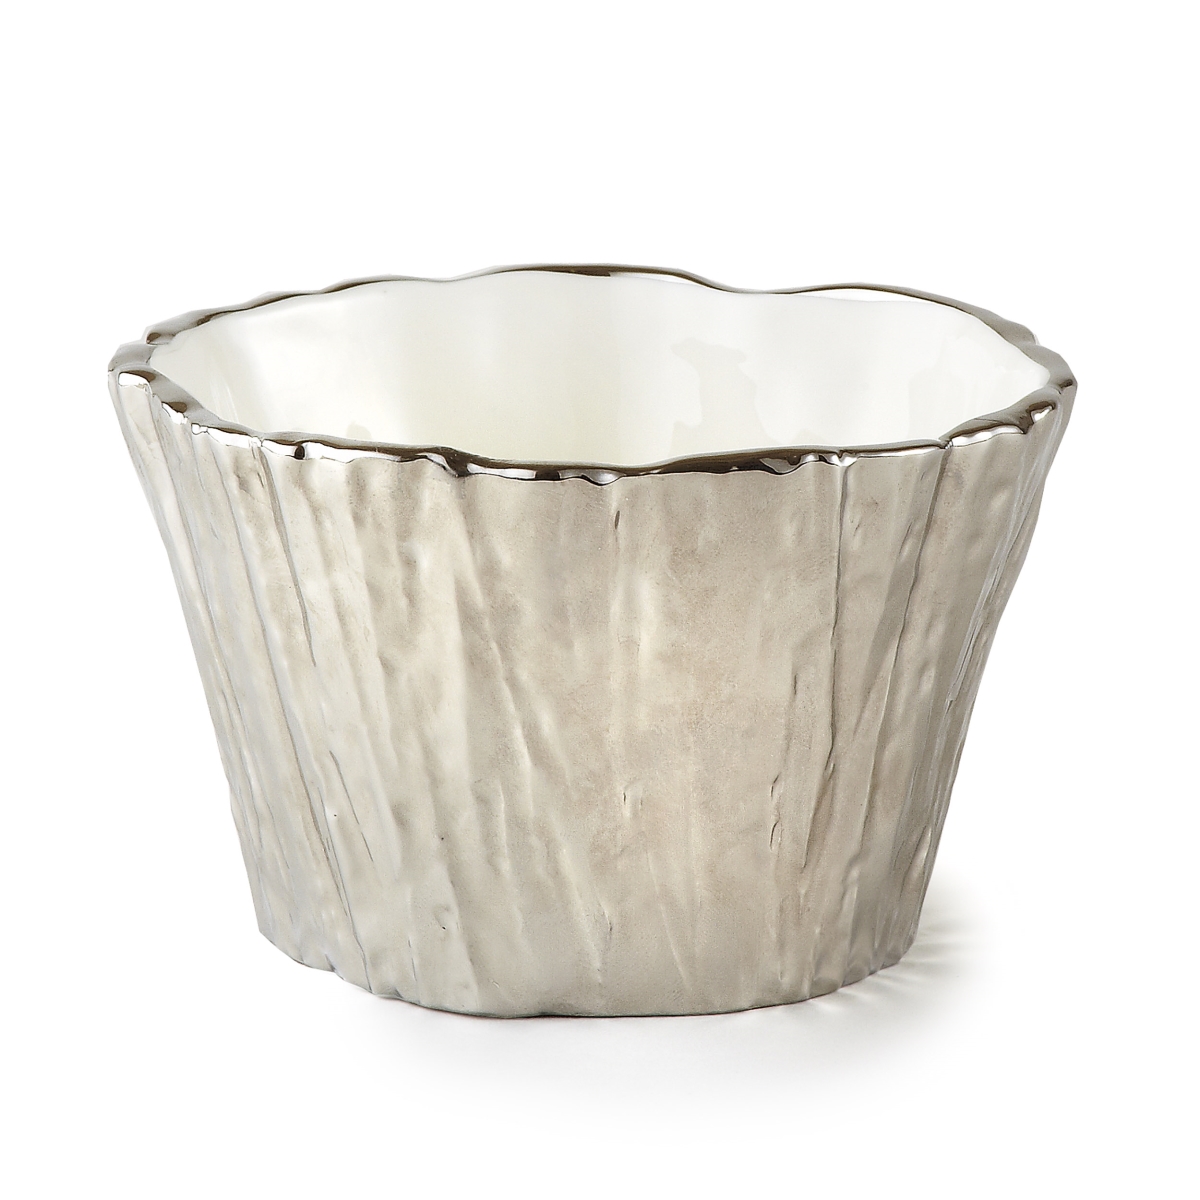 69101 5 In. Tree Bark Porcelain Serving Bowl, Silver